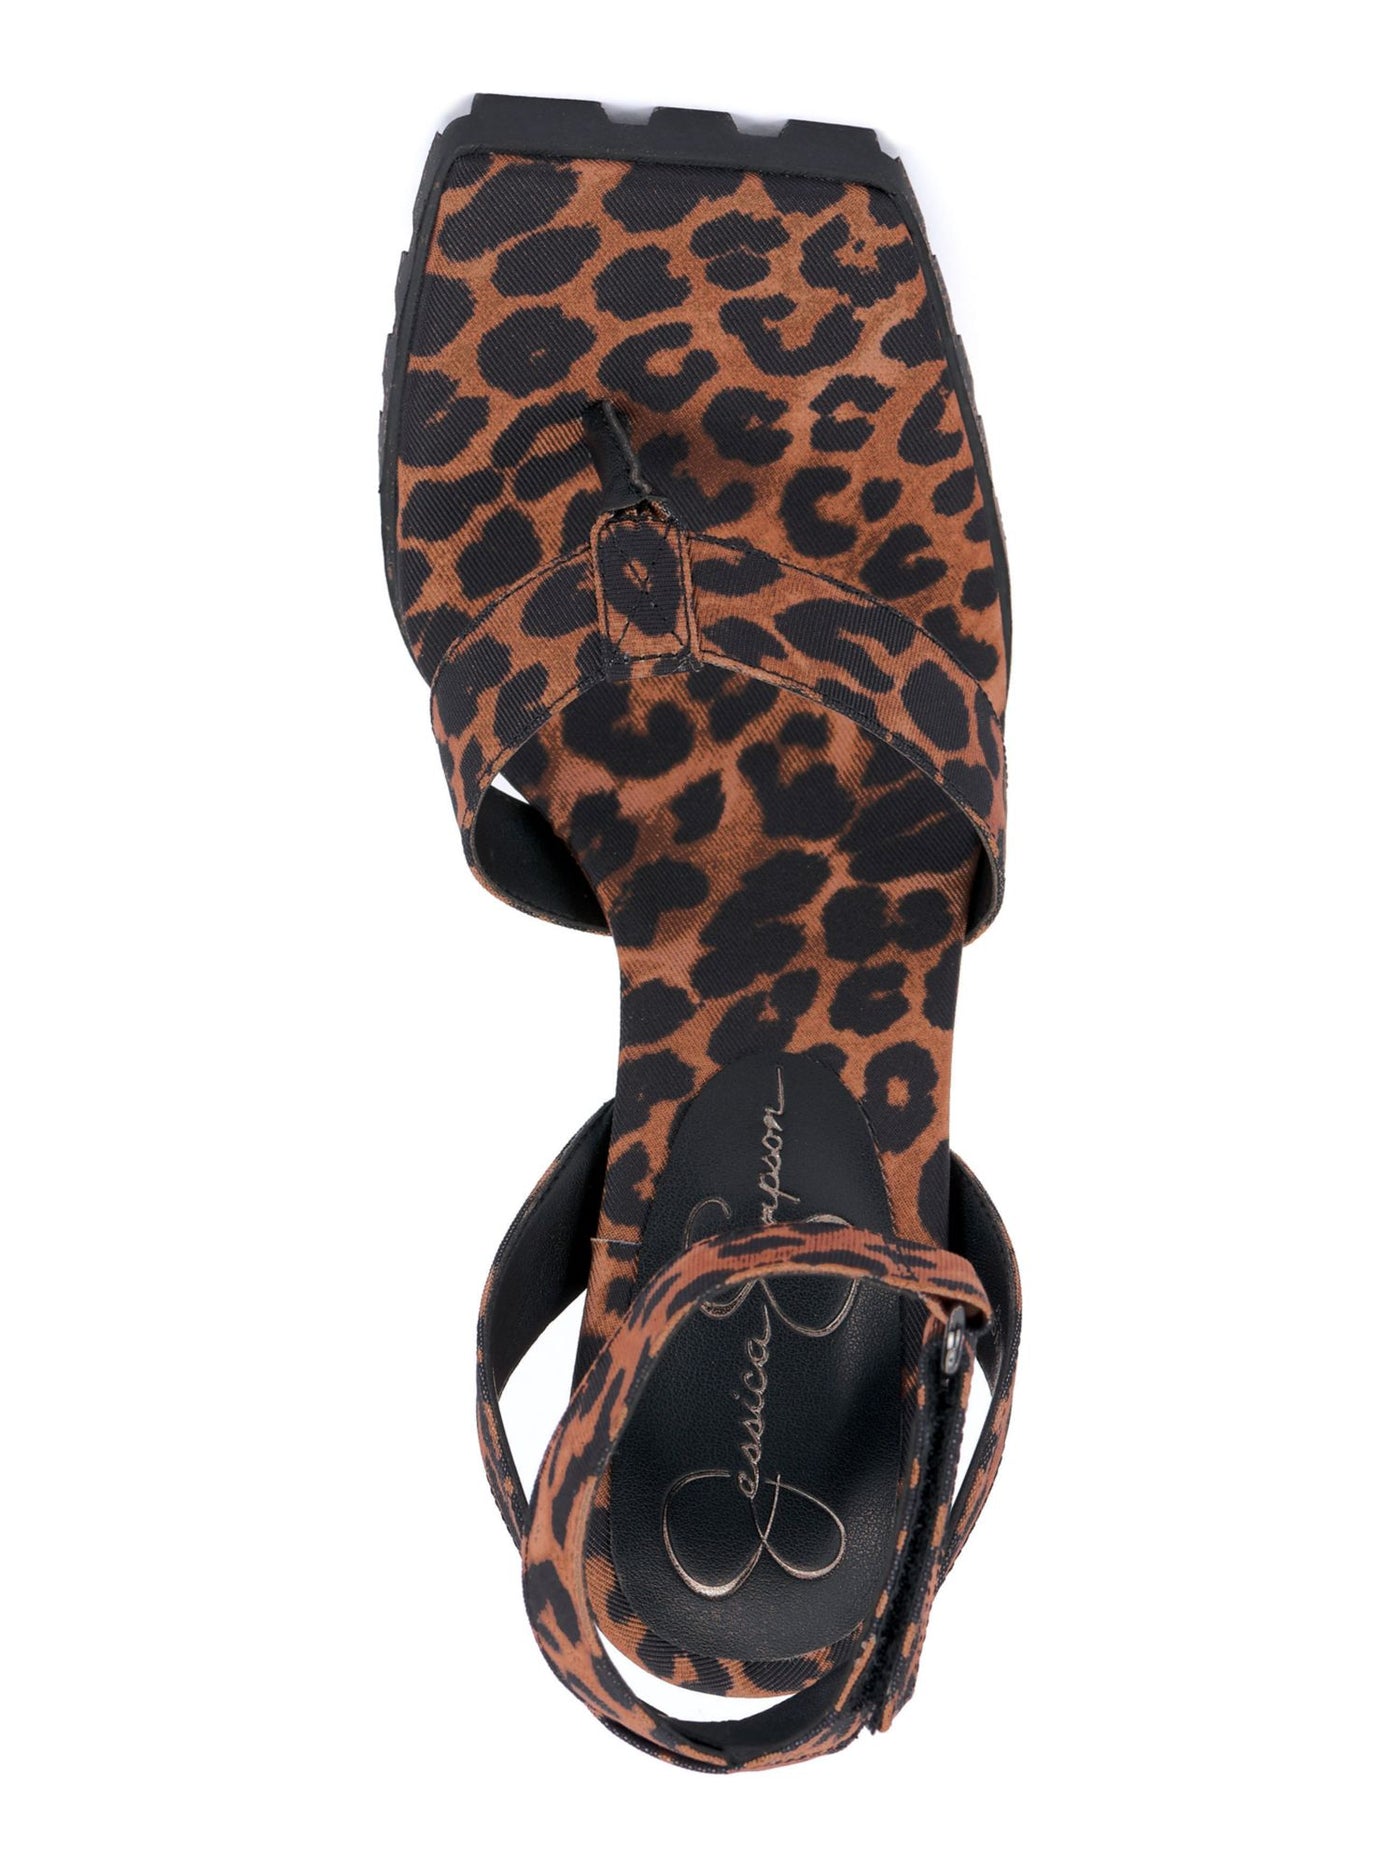 JESSICA SIMPSON Womens Brown Leopard Print Ankle Strap Lug Sole Kielne Square Toe Block Heel Heeled Sandal 9 M